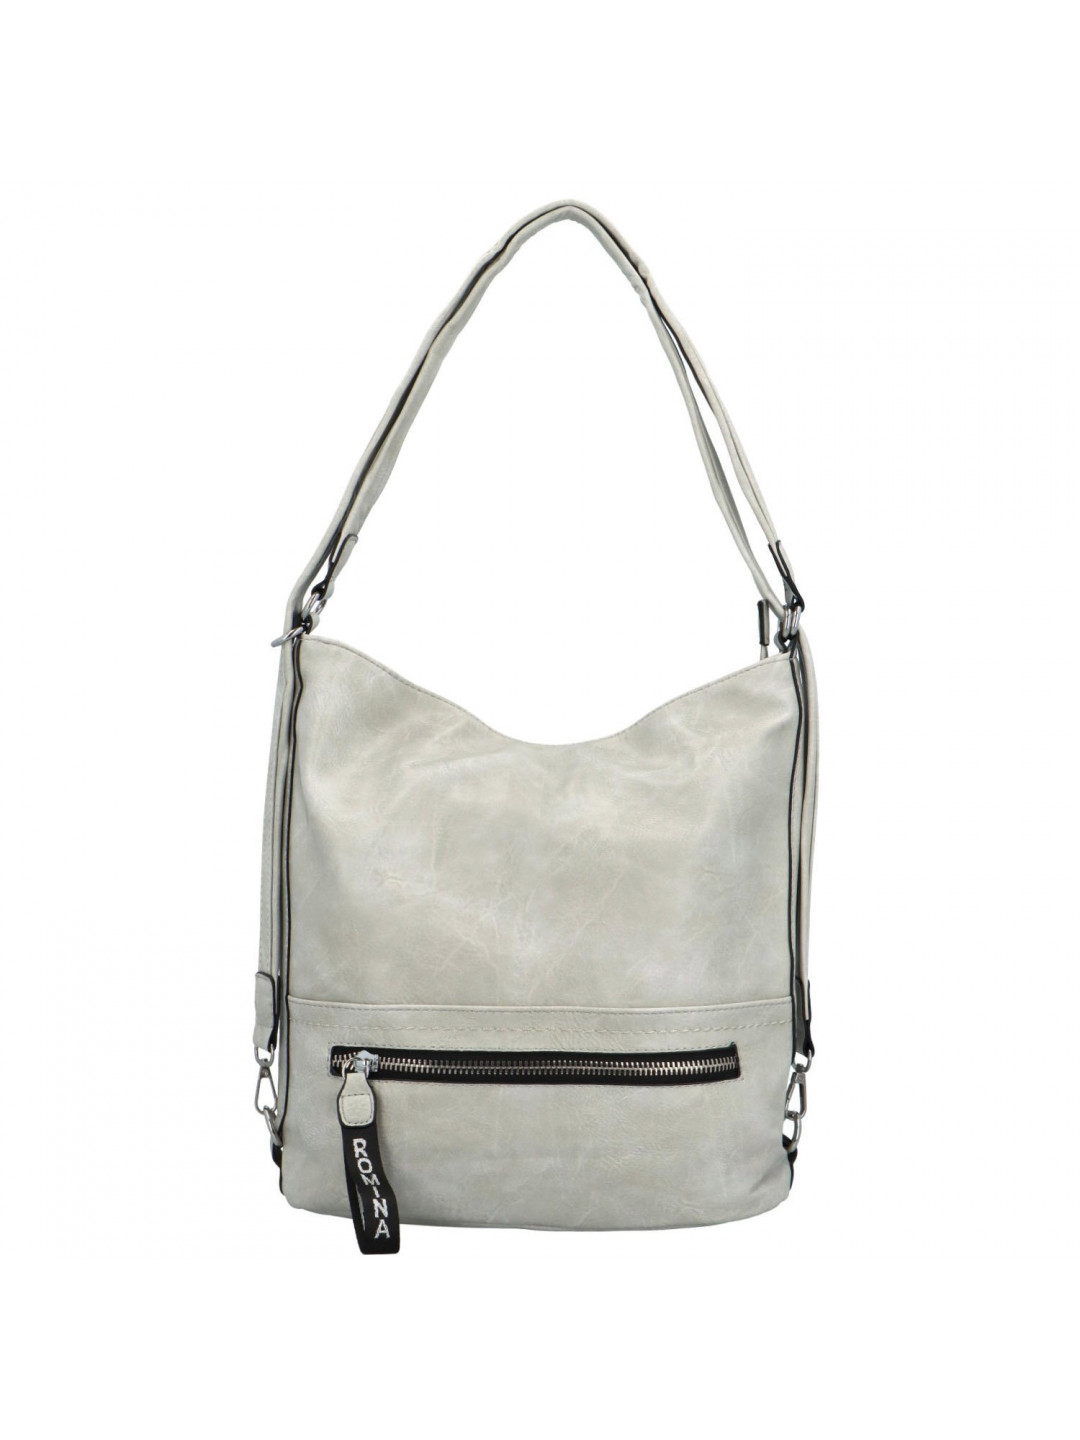 Stylový dámský kabelko-batoh Trittia šedá